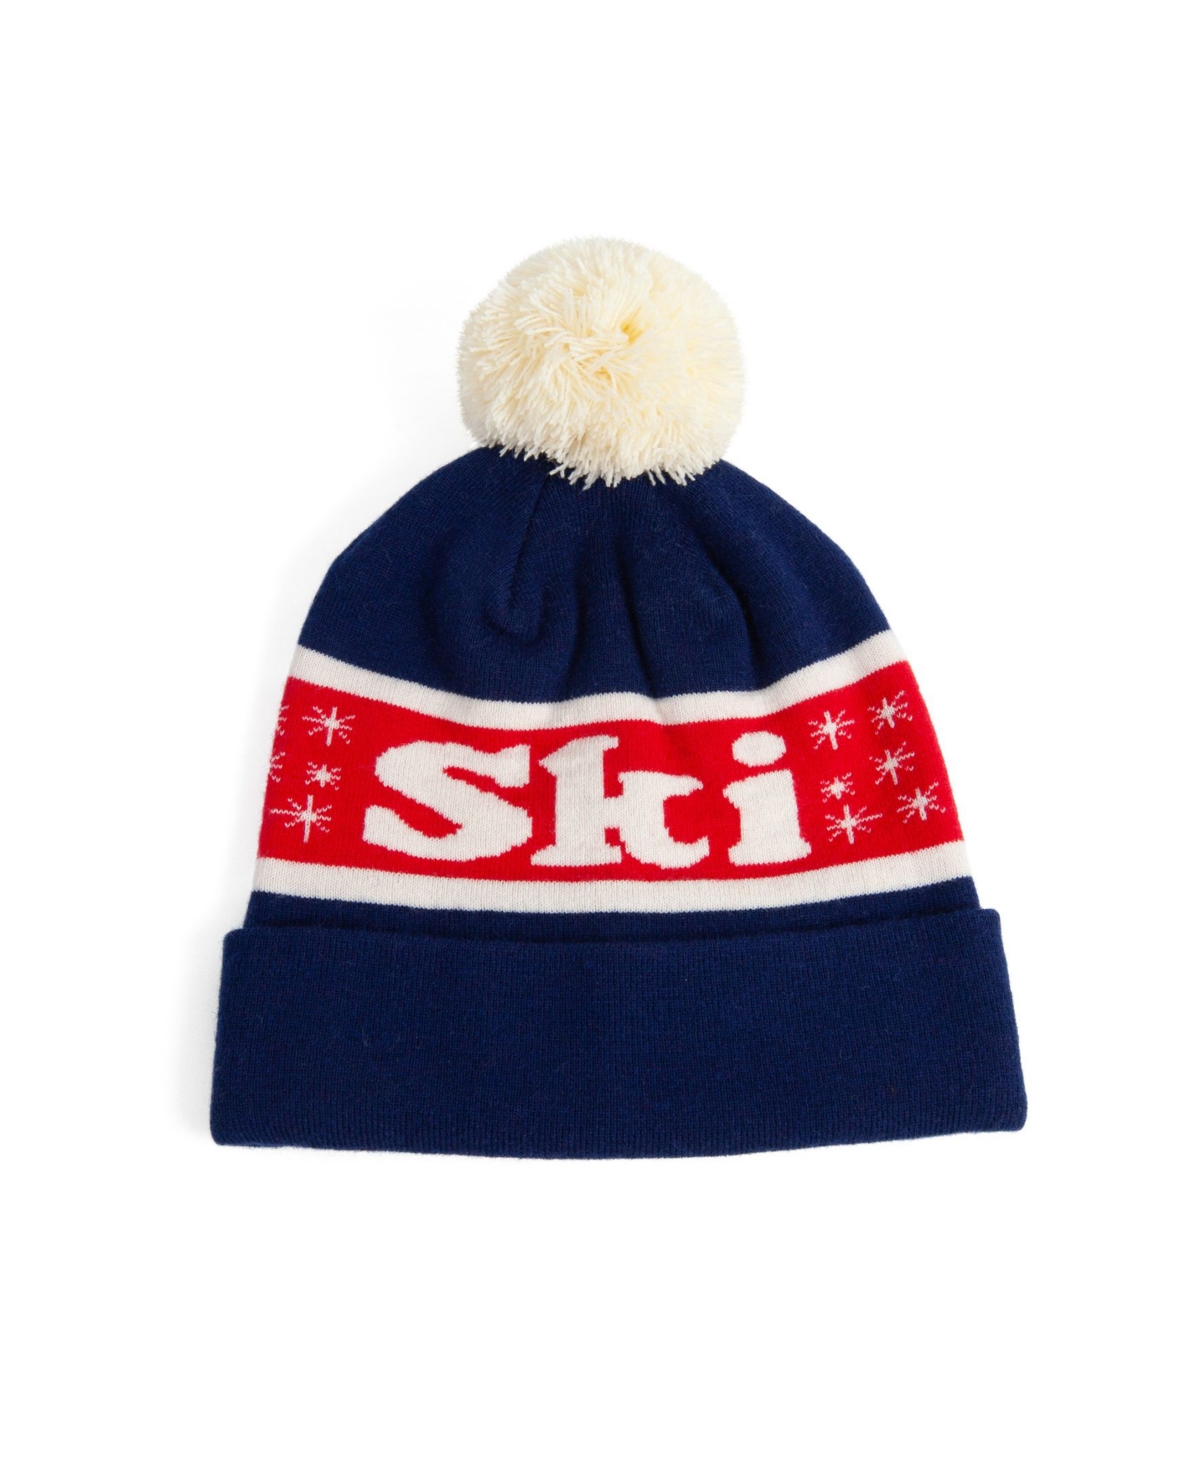 Women's Ski Lady Winter Hats - Blue, Red, White